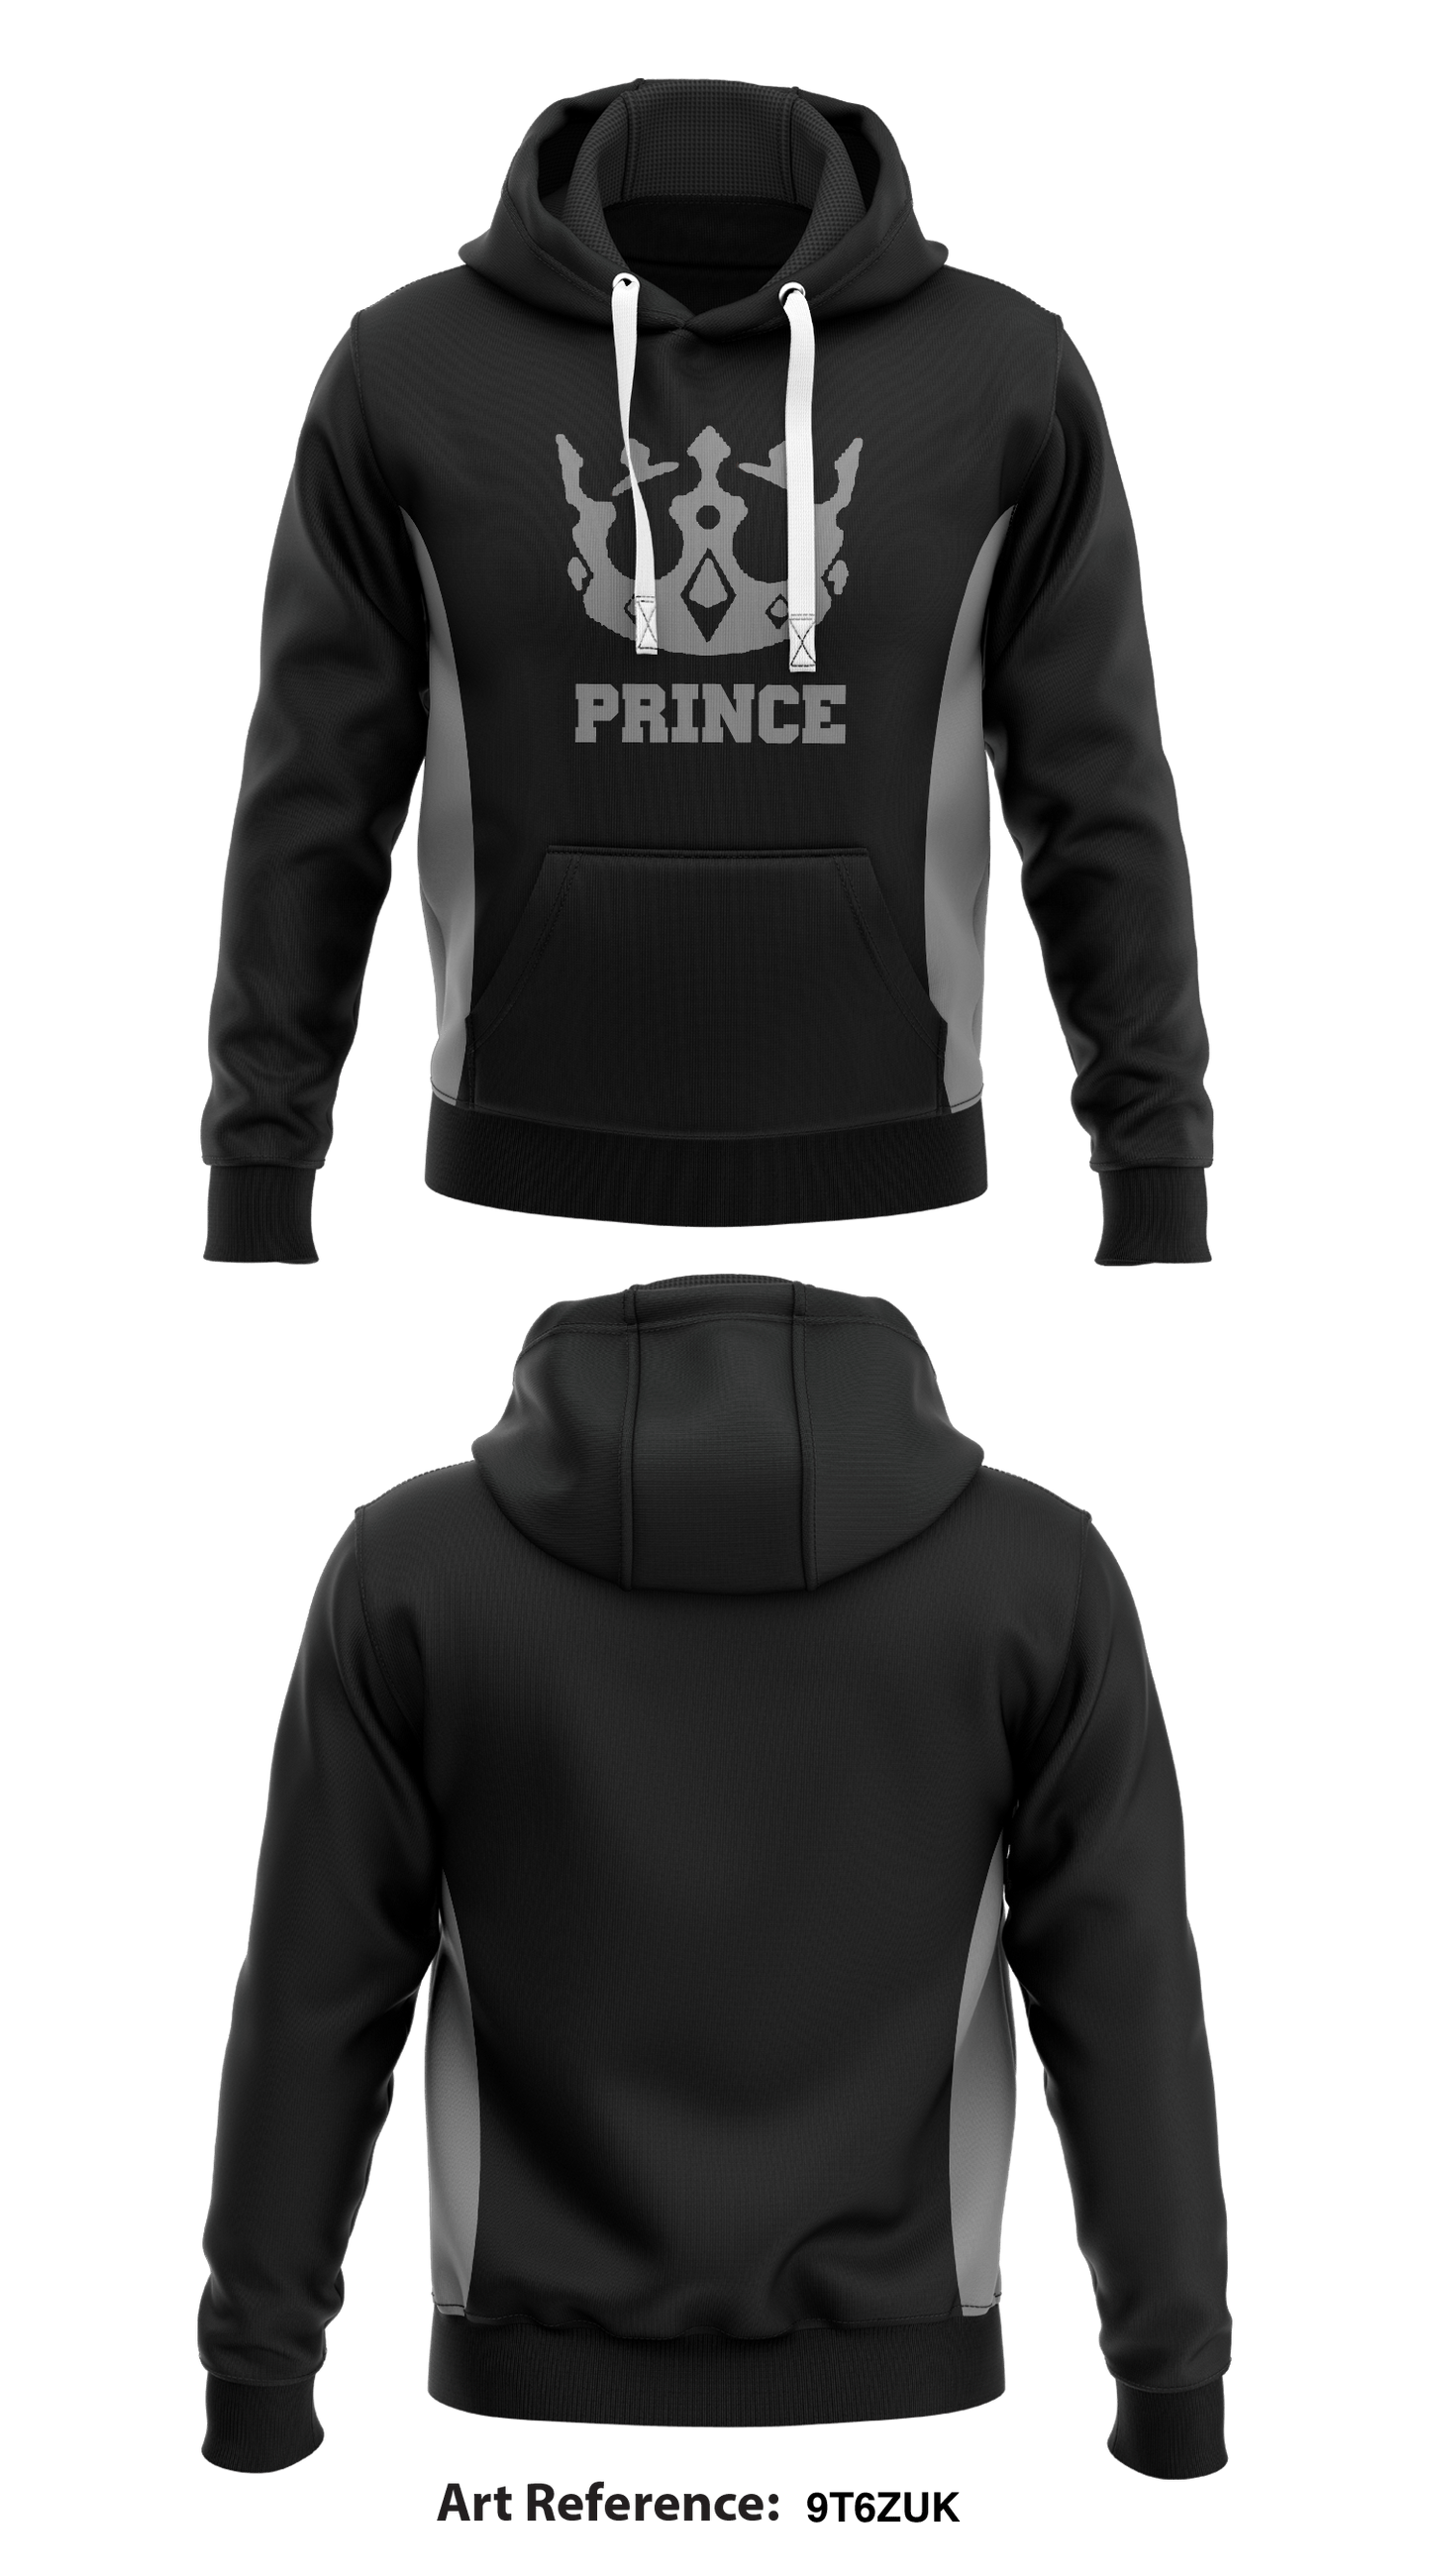 PRINCE Store 1 Core Men's Hooded Performance Sweatshirt - 9t6zUK